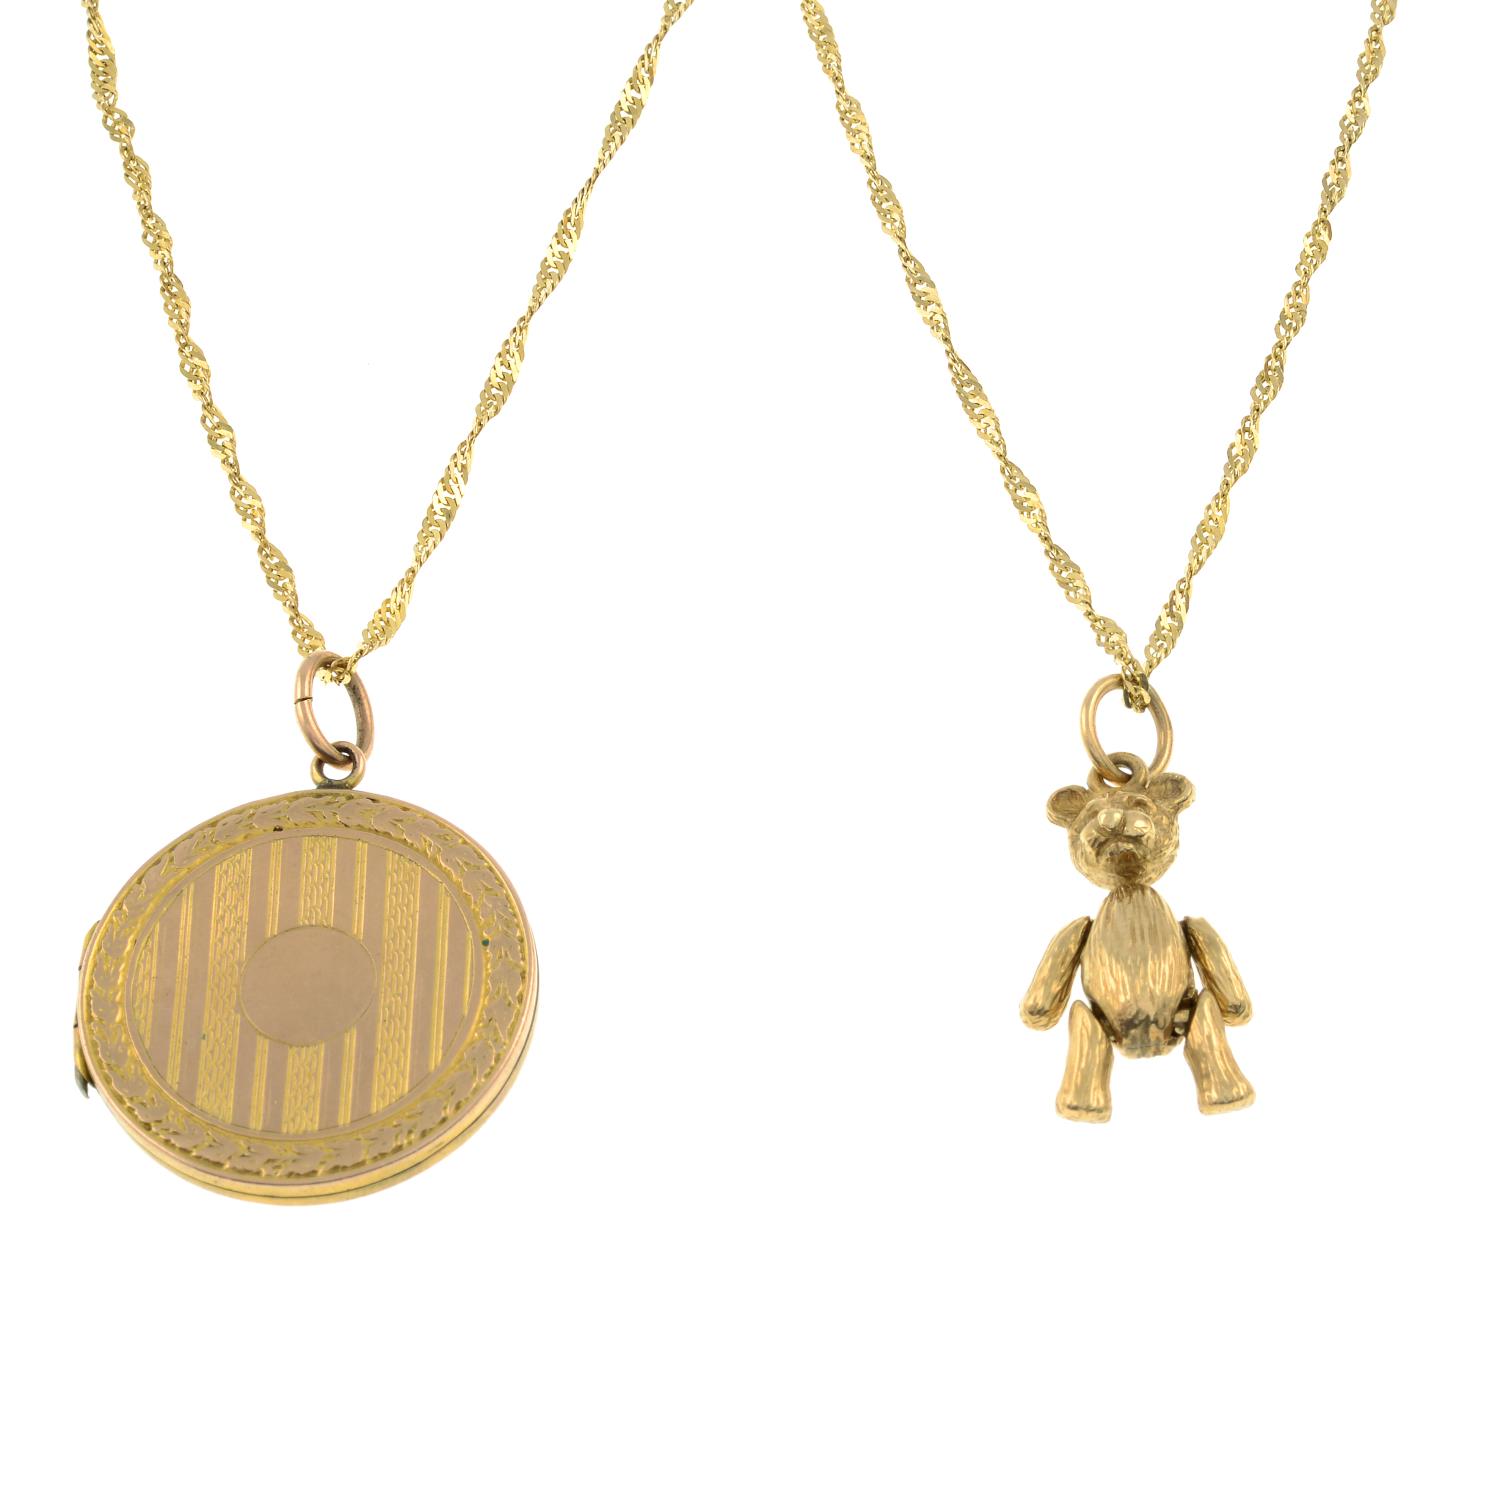 9ct gold teddy bear pendant,